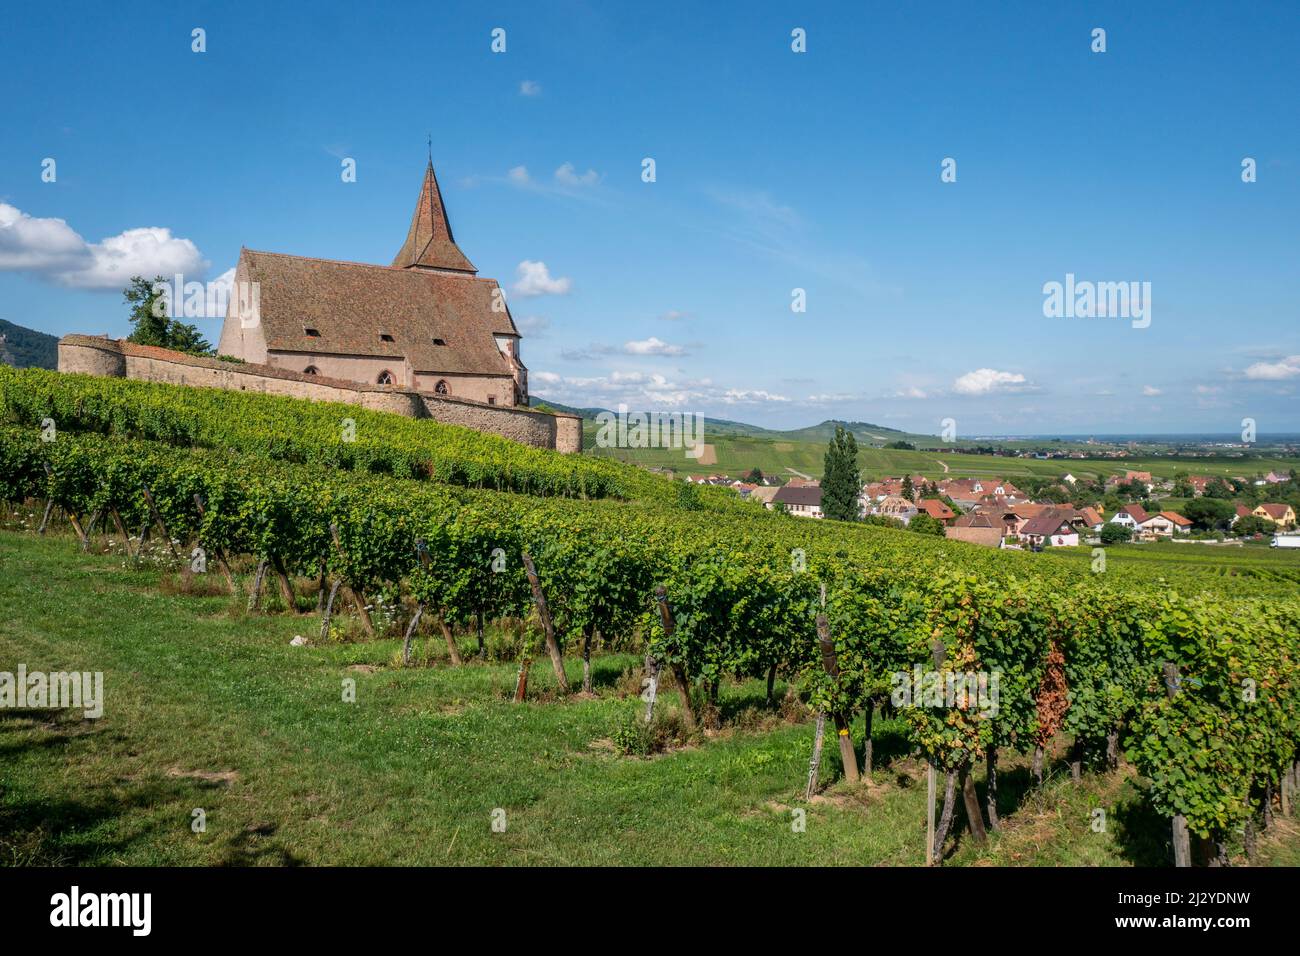 Iglesia en los viñedos, iglesia gótica fortificada Saint-Jacques, Hunawihr, Alto Rin, la ruta del vino de Alsacia, Alsacia, Francia, Europa Foto de stock